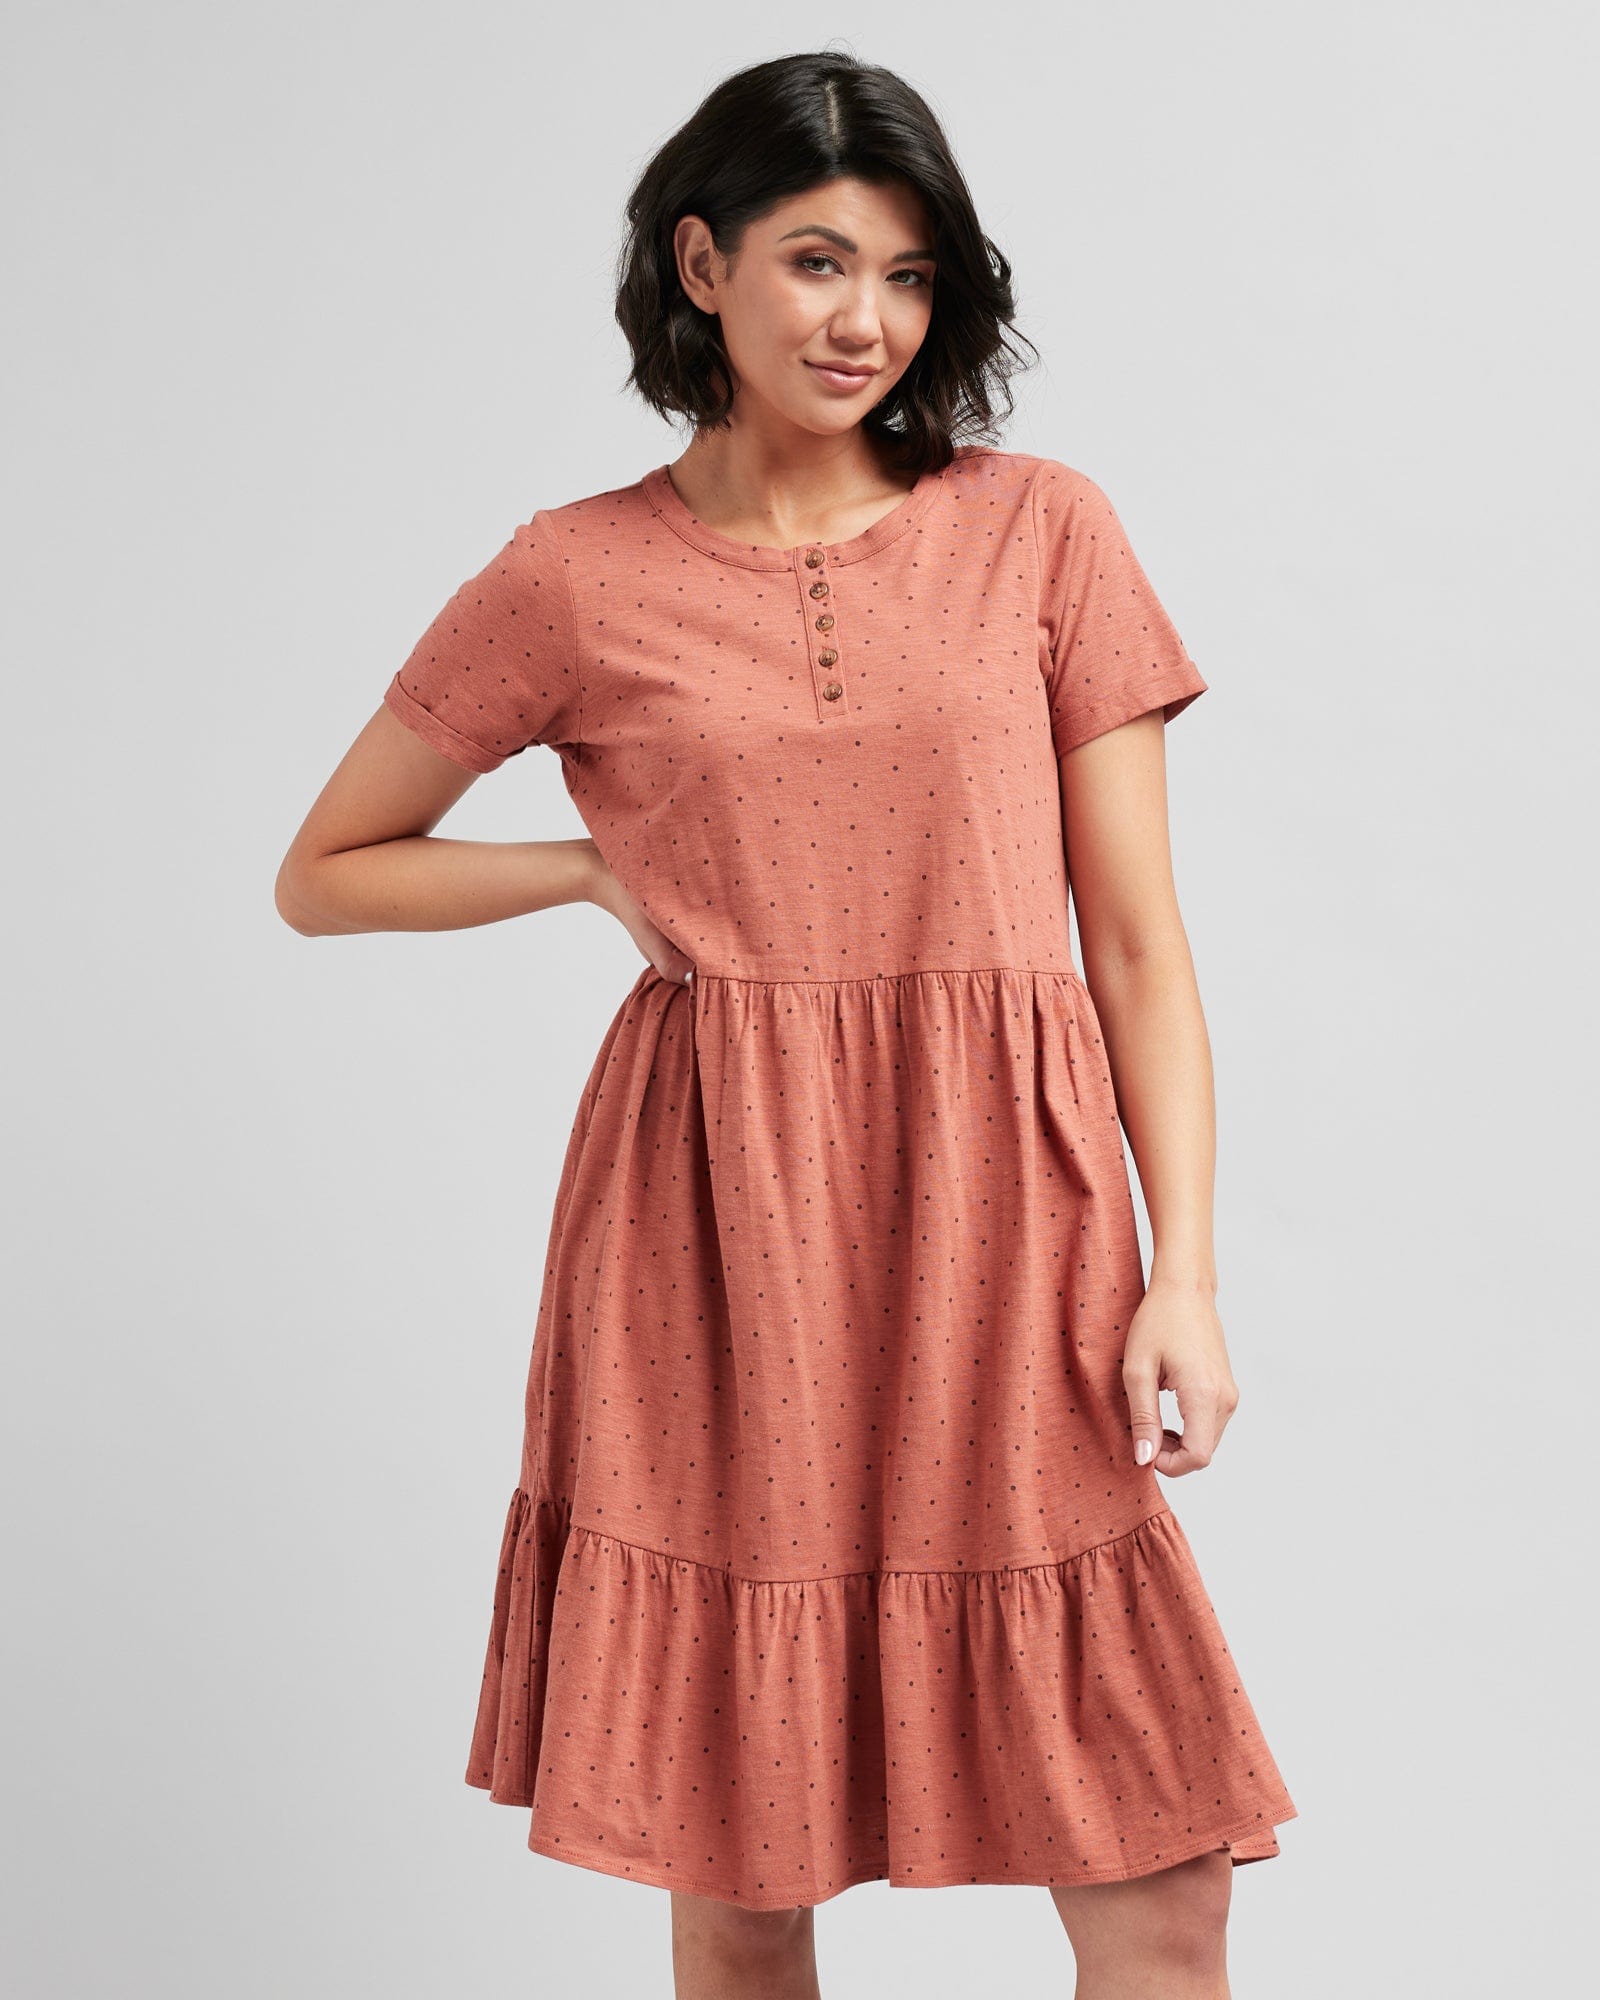 Woman in a short sleeve, henley top, dotted swiss, orange dress